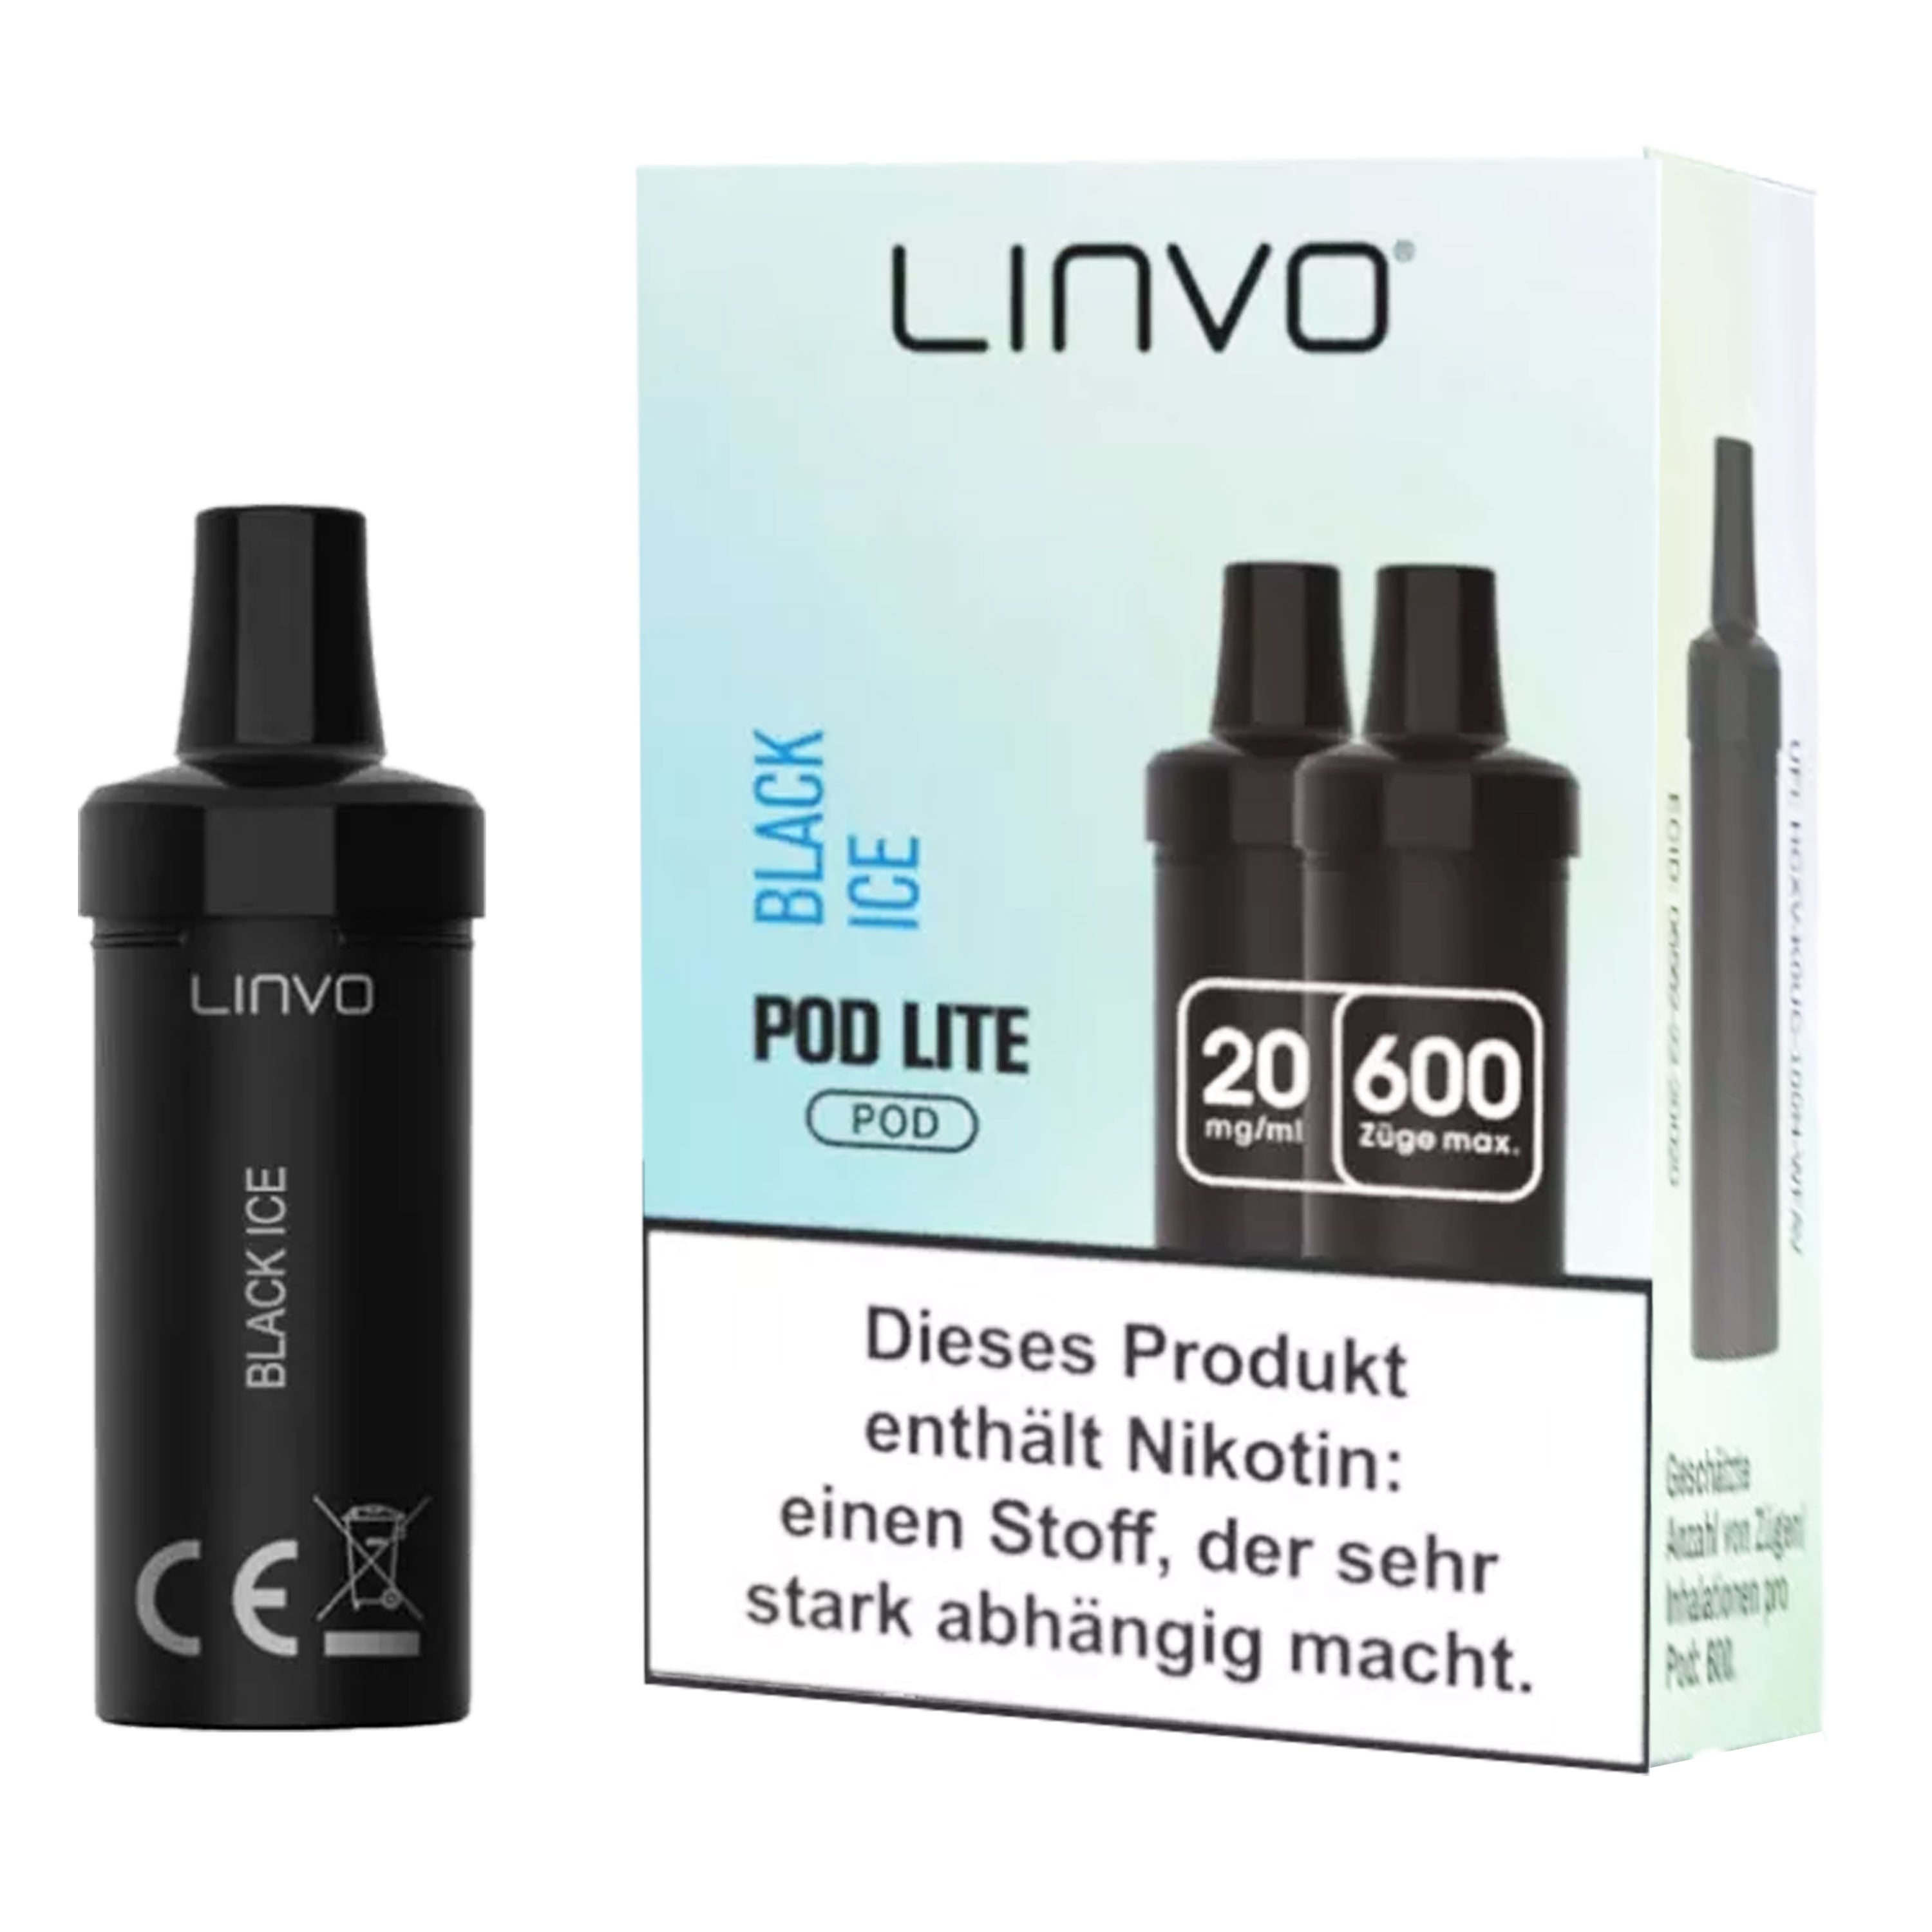 Linvo  - Pod Lite - Black Ice (2 x 2 ml) - Pod (2 Stück)